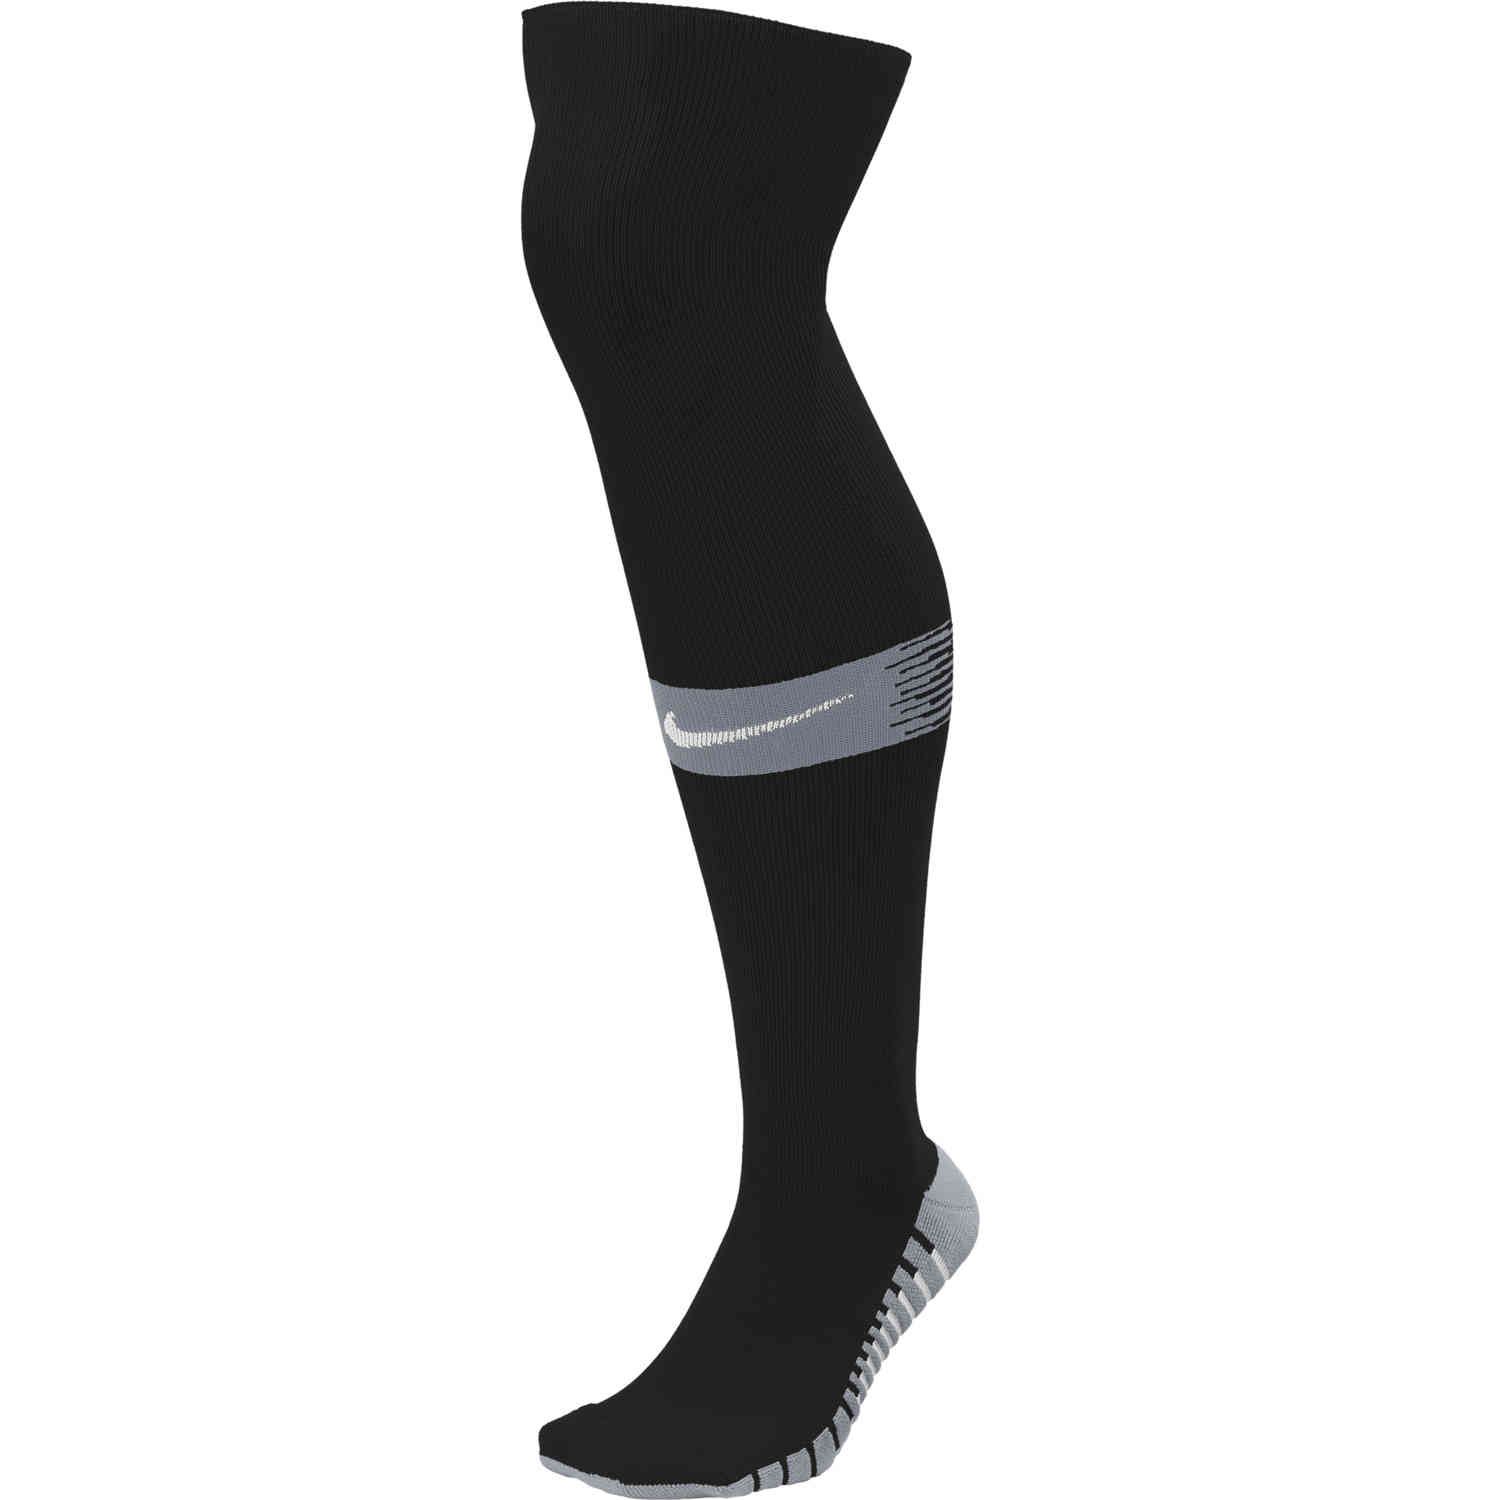 Nike Team Matchfit Soccer Socks Black/Cool Grey - SoccerPro